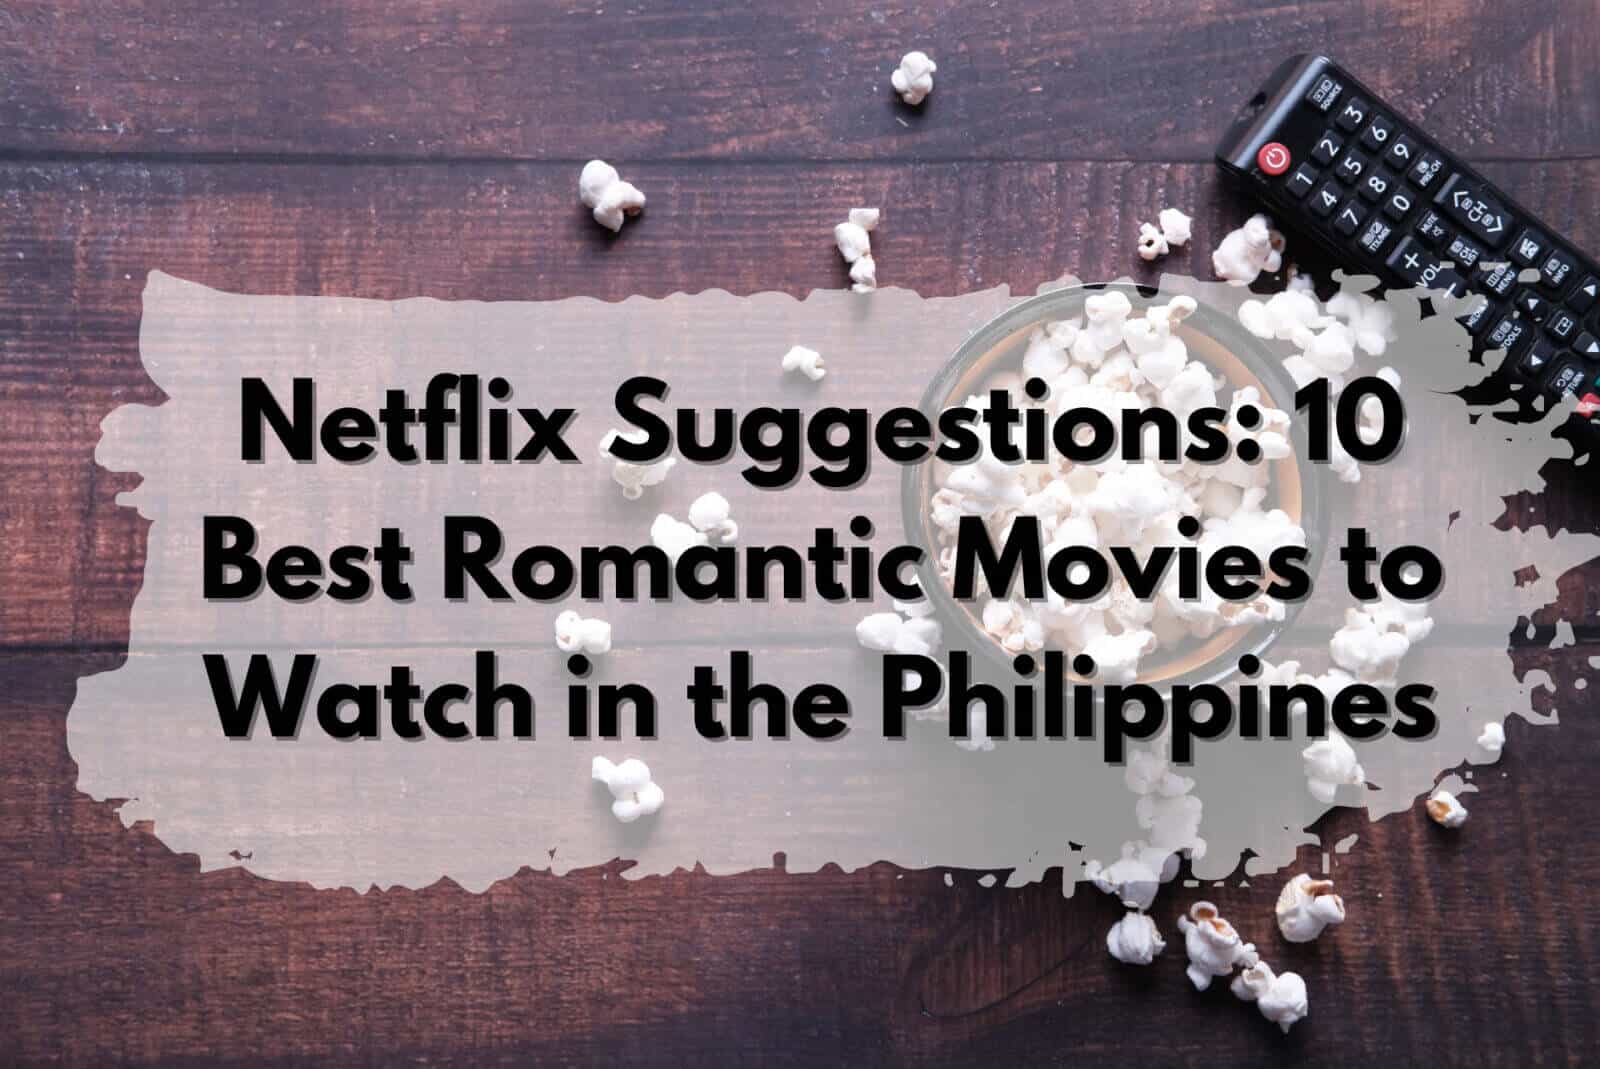 Netflix, romantic movies, Philippines.